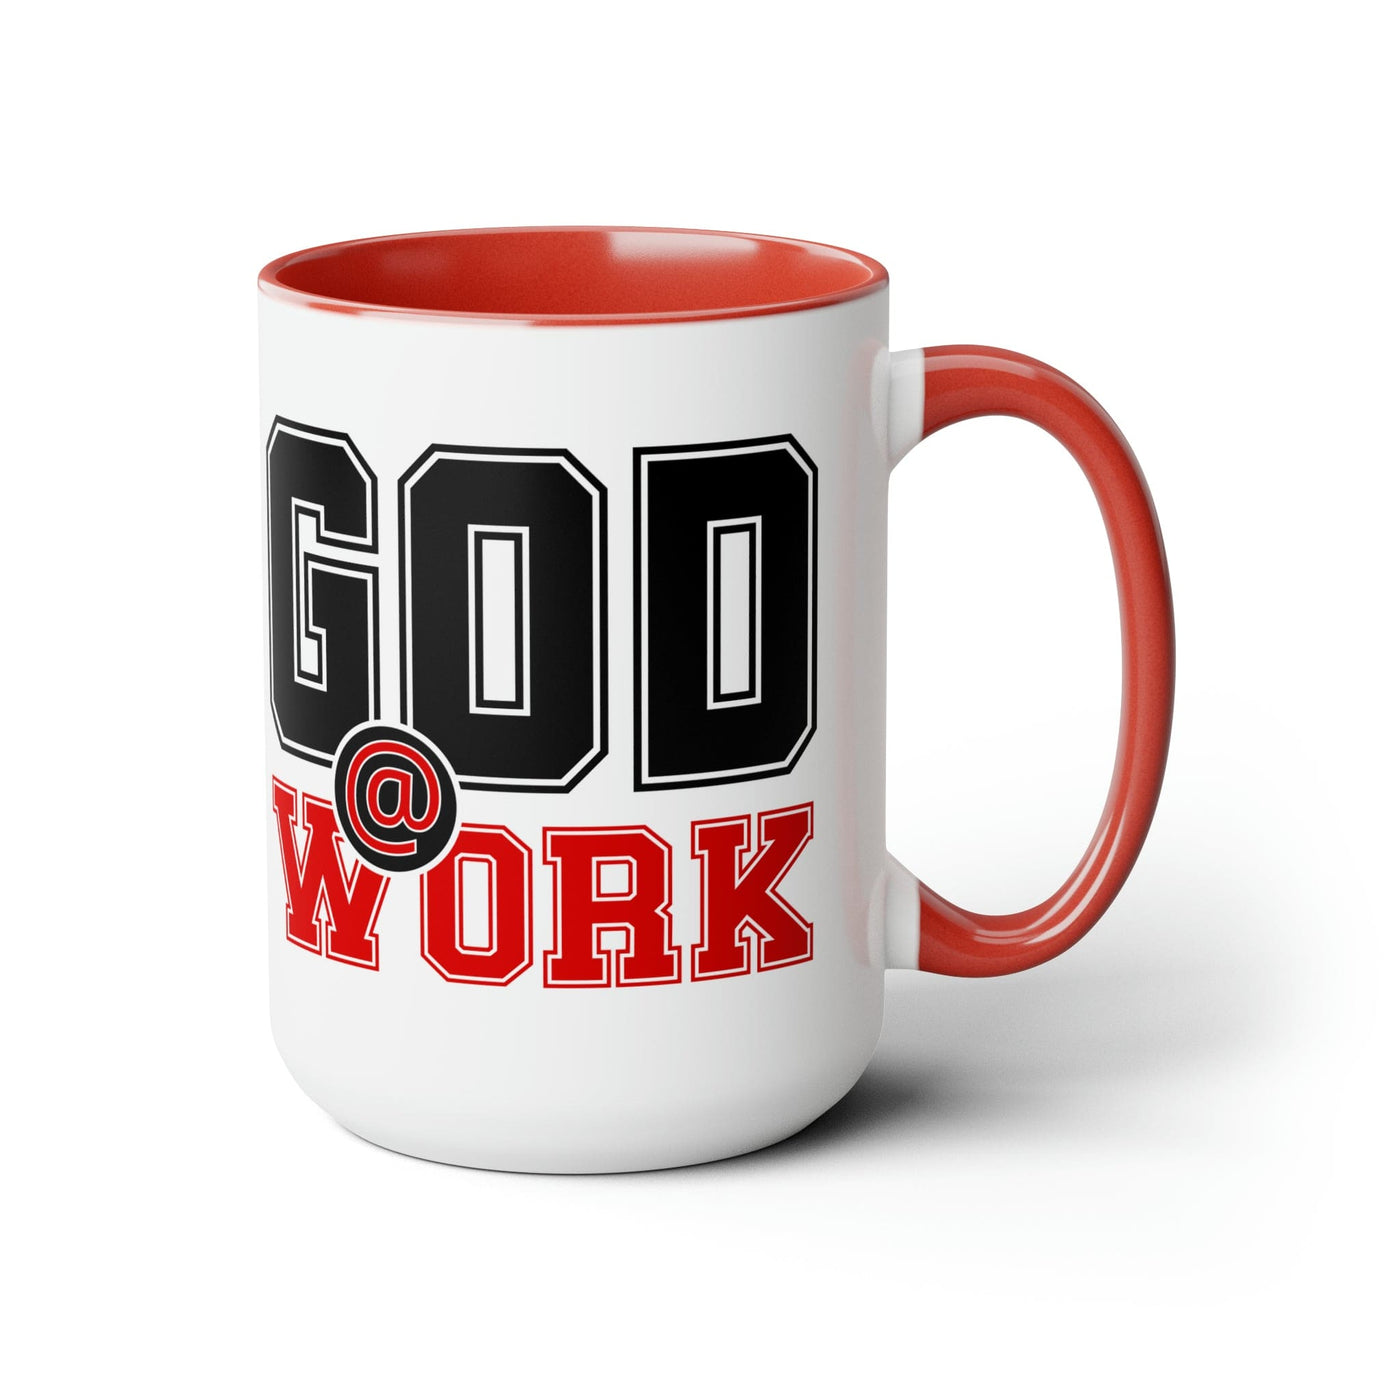 Accent Ceramic Coffee Mug 15oz - God @ Work Black And Red Print - Decorative |